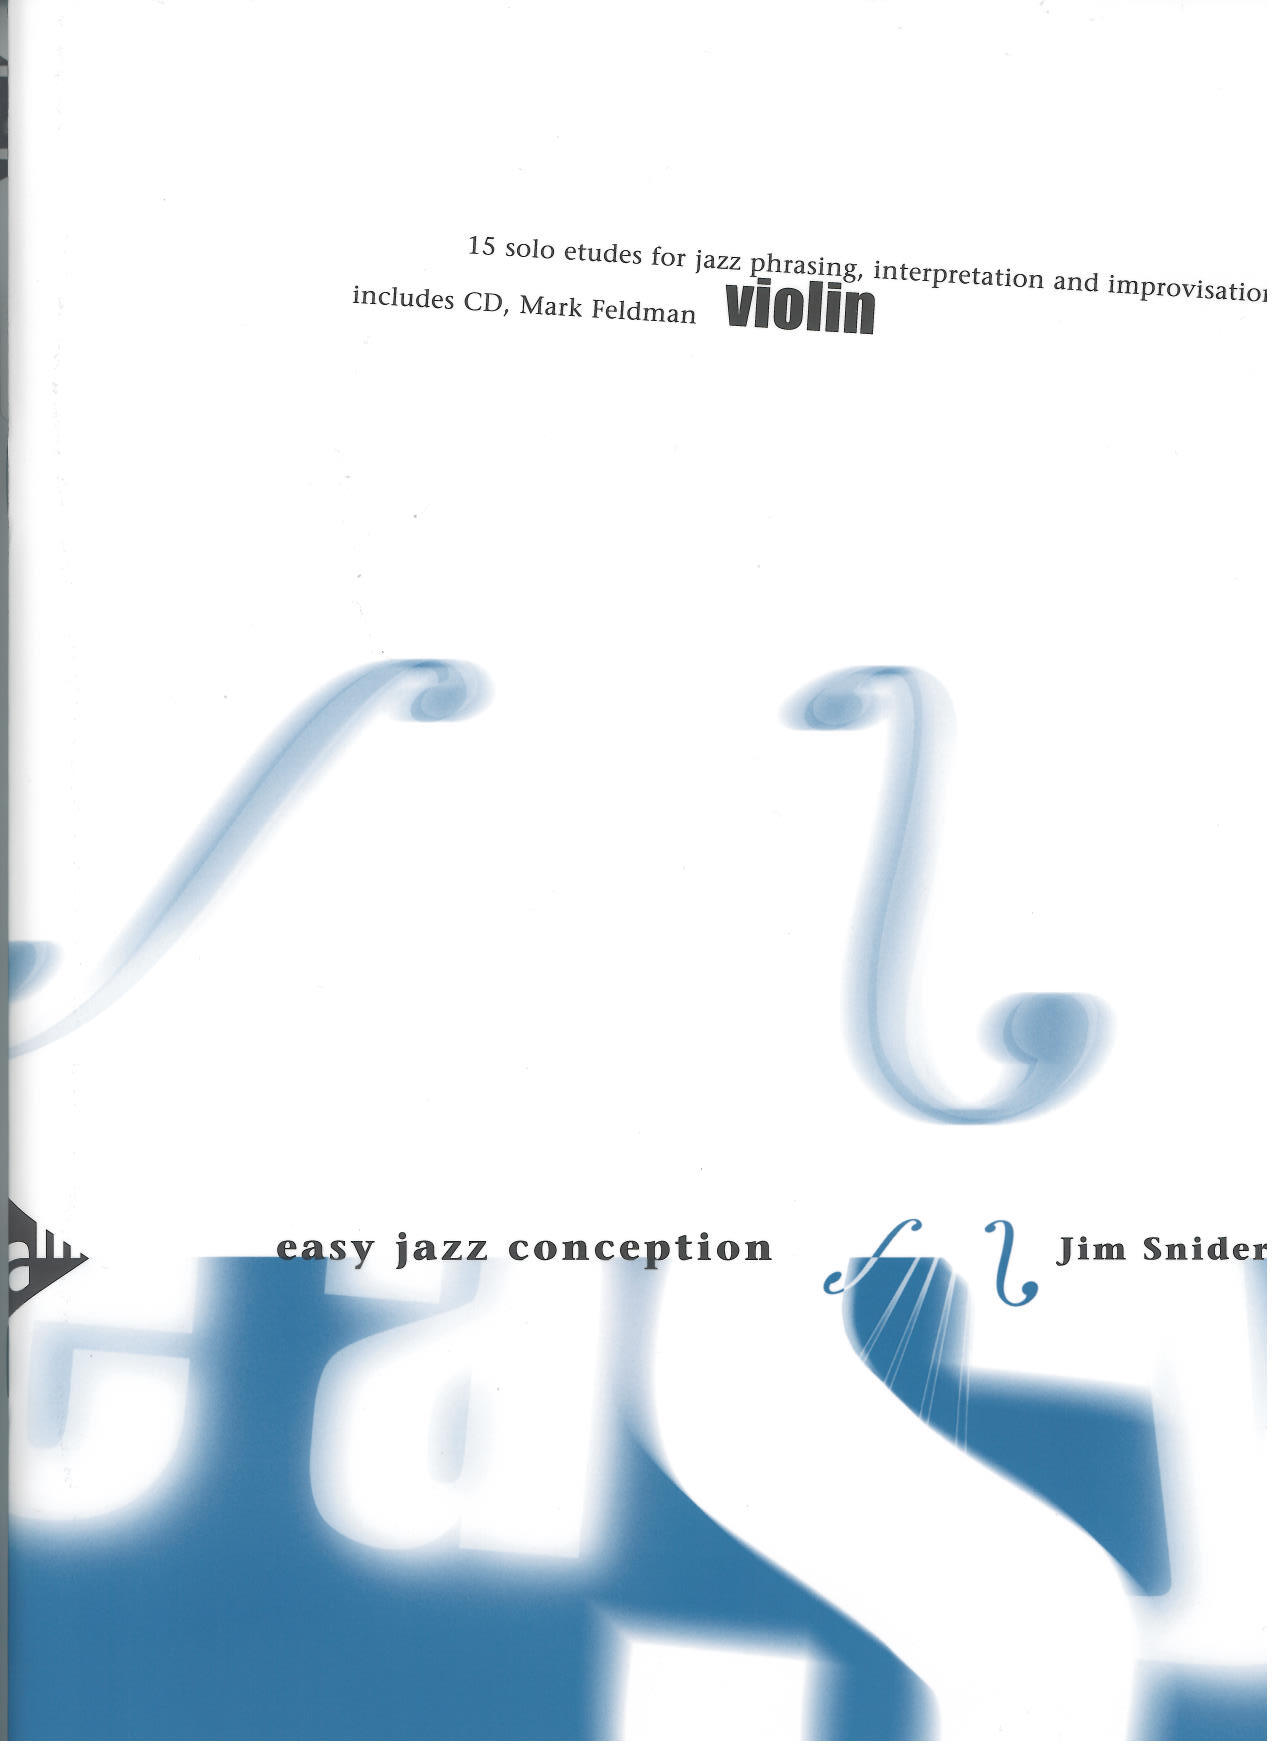 Easy Jazz Conception 15 solo etudes for jazz phrasing interpretation and improvisation J. Snidero Violin : photo 1